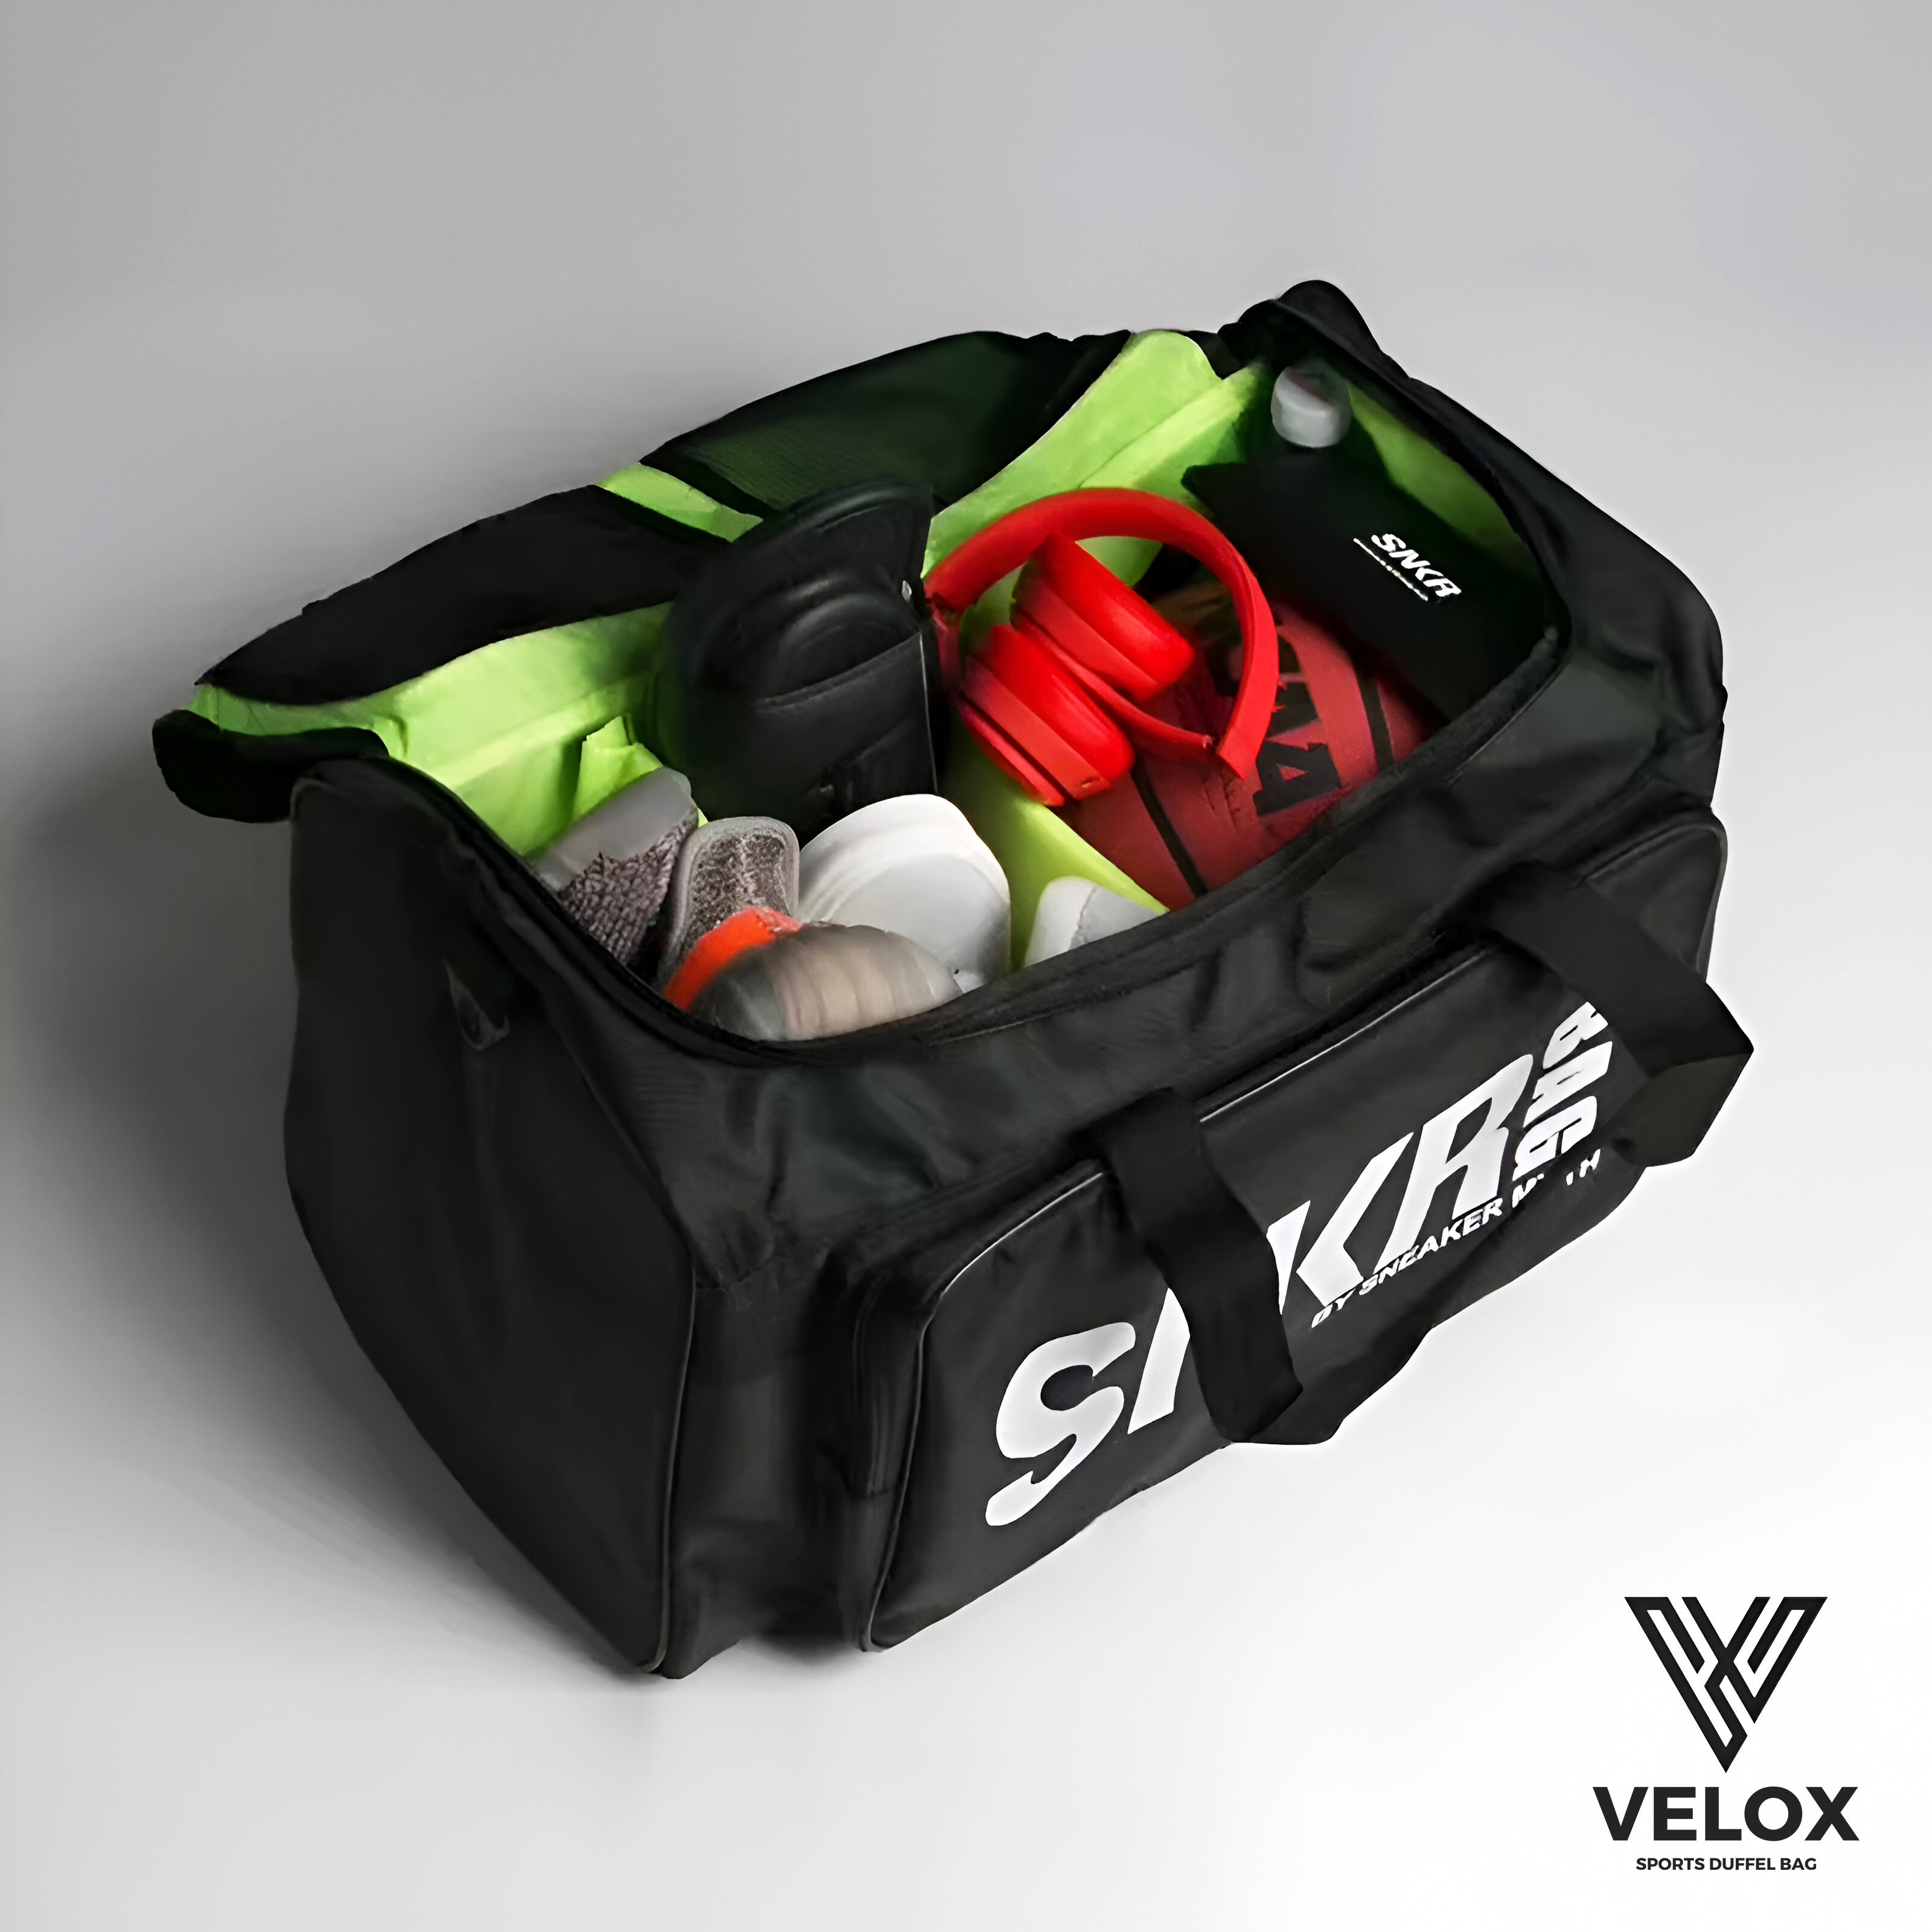 Velox Duffel Bag